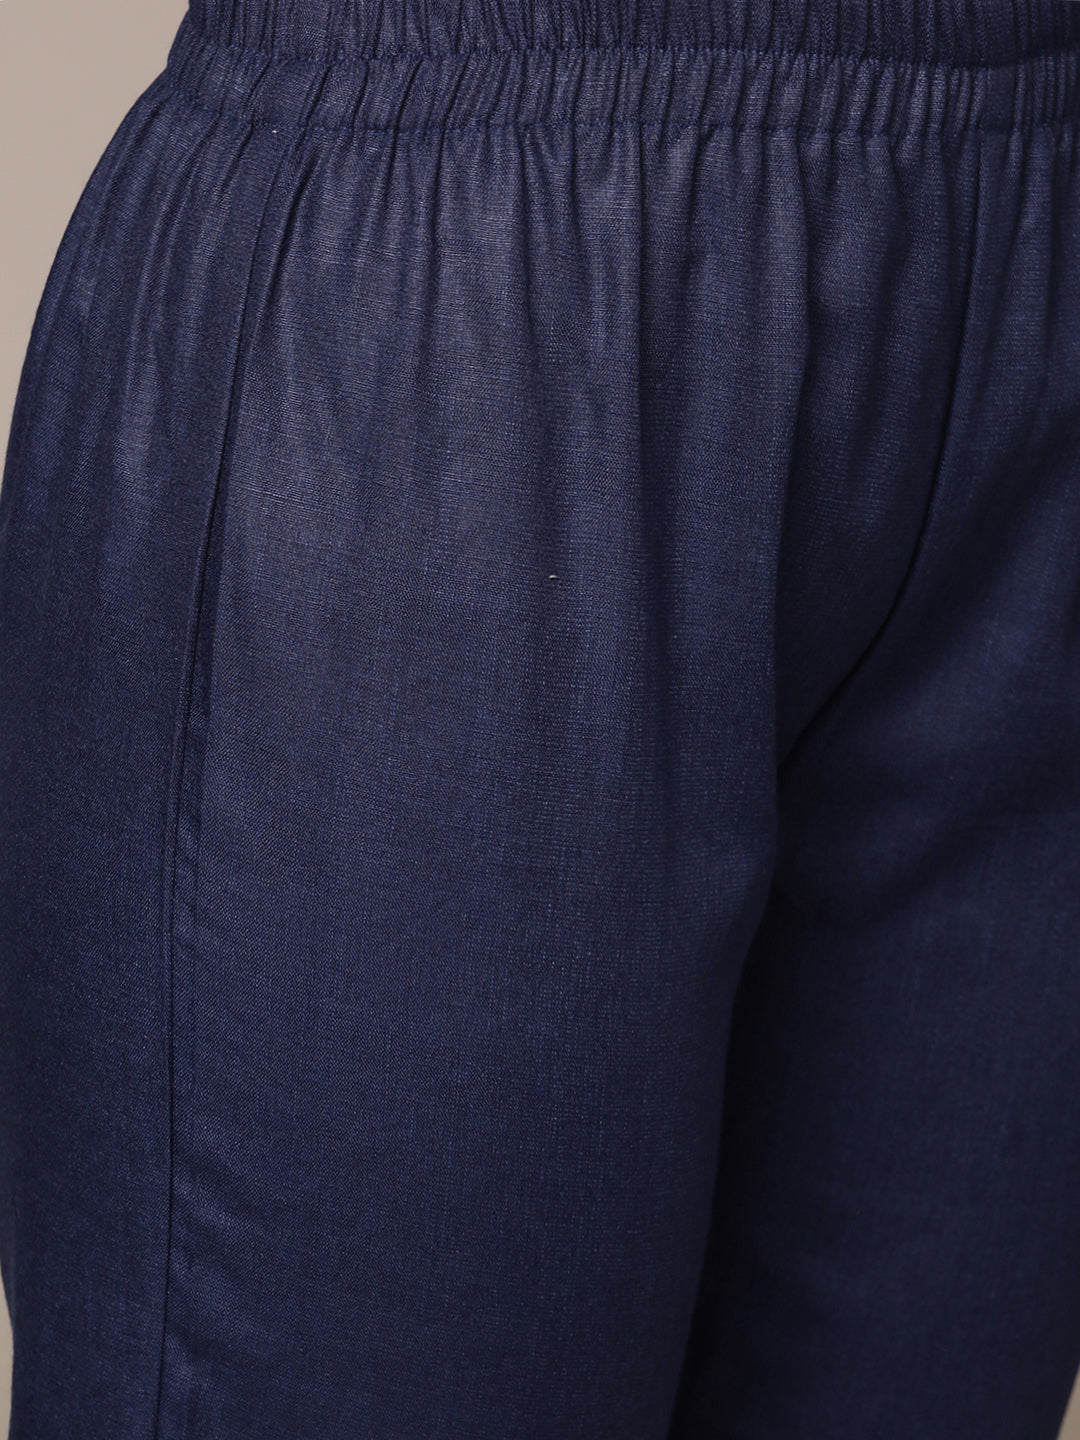 Anubhutee Women's Indigo Blue Cotton Kantha Kurta Set with Trousers